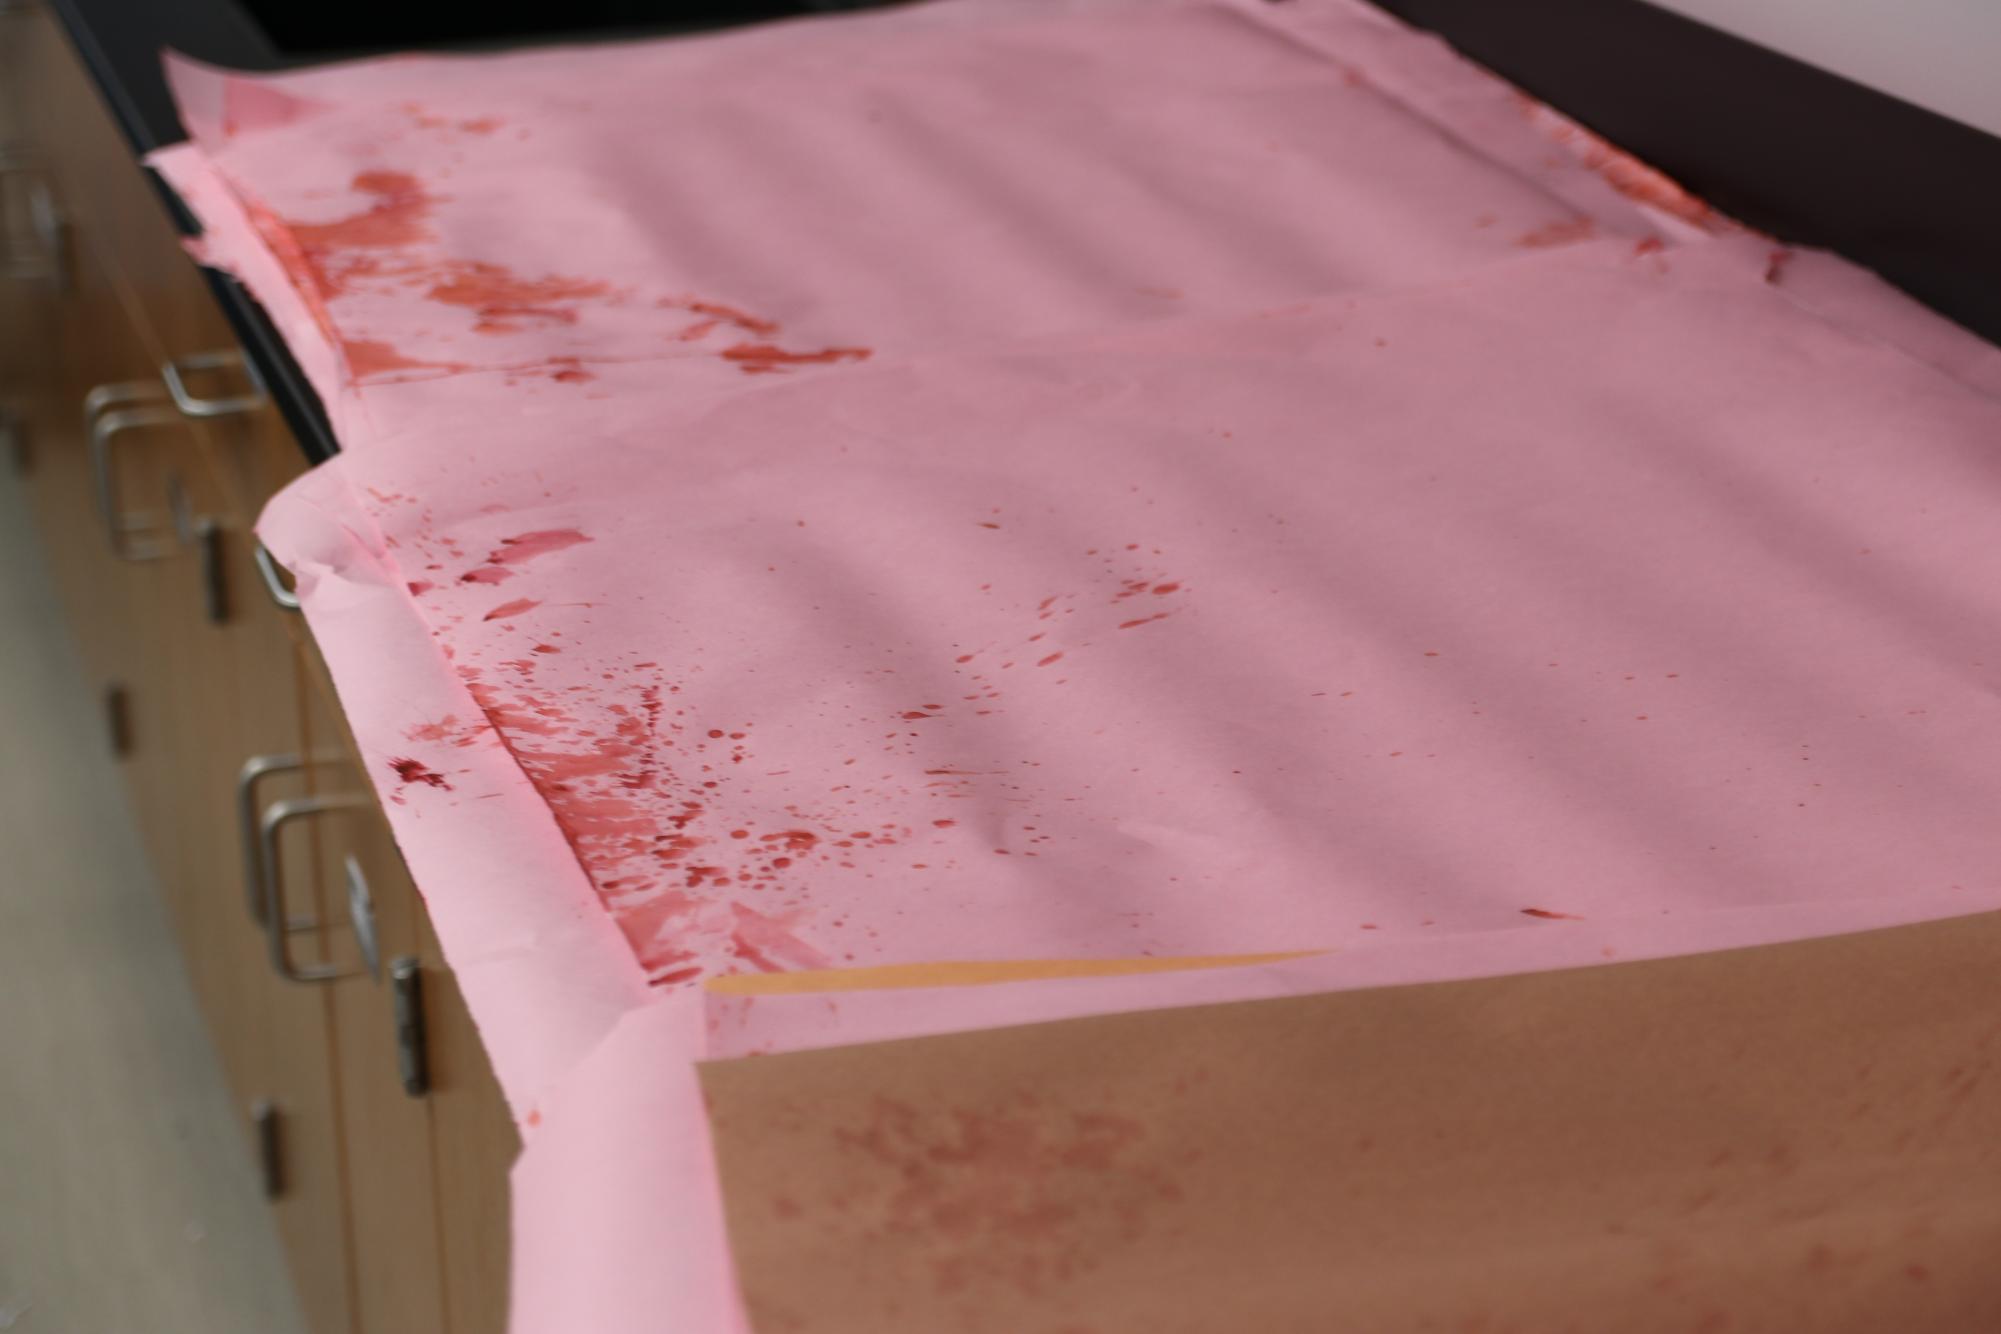 Forensic+Students+Investigate+Blood+Splatters